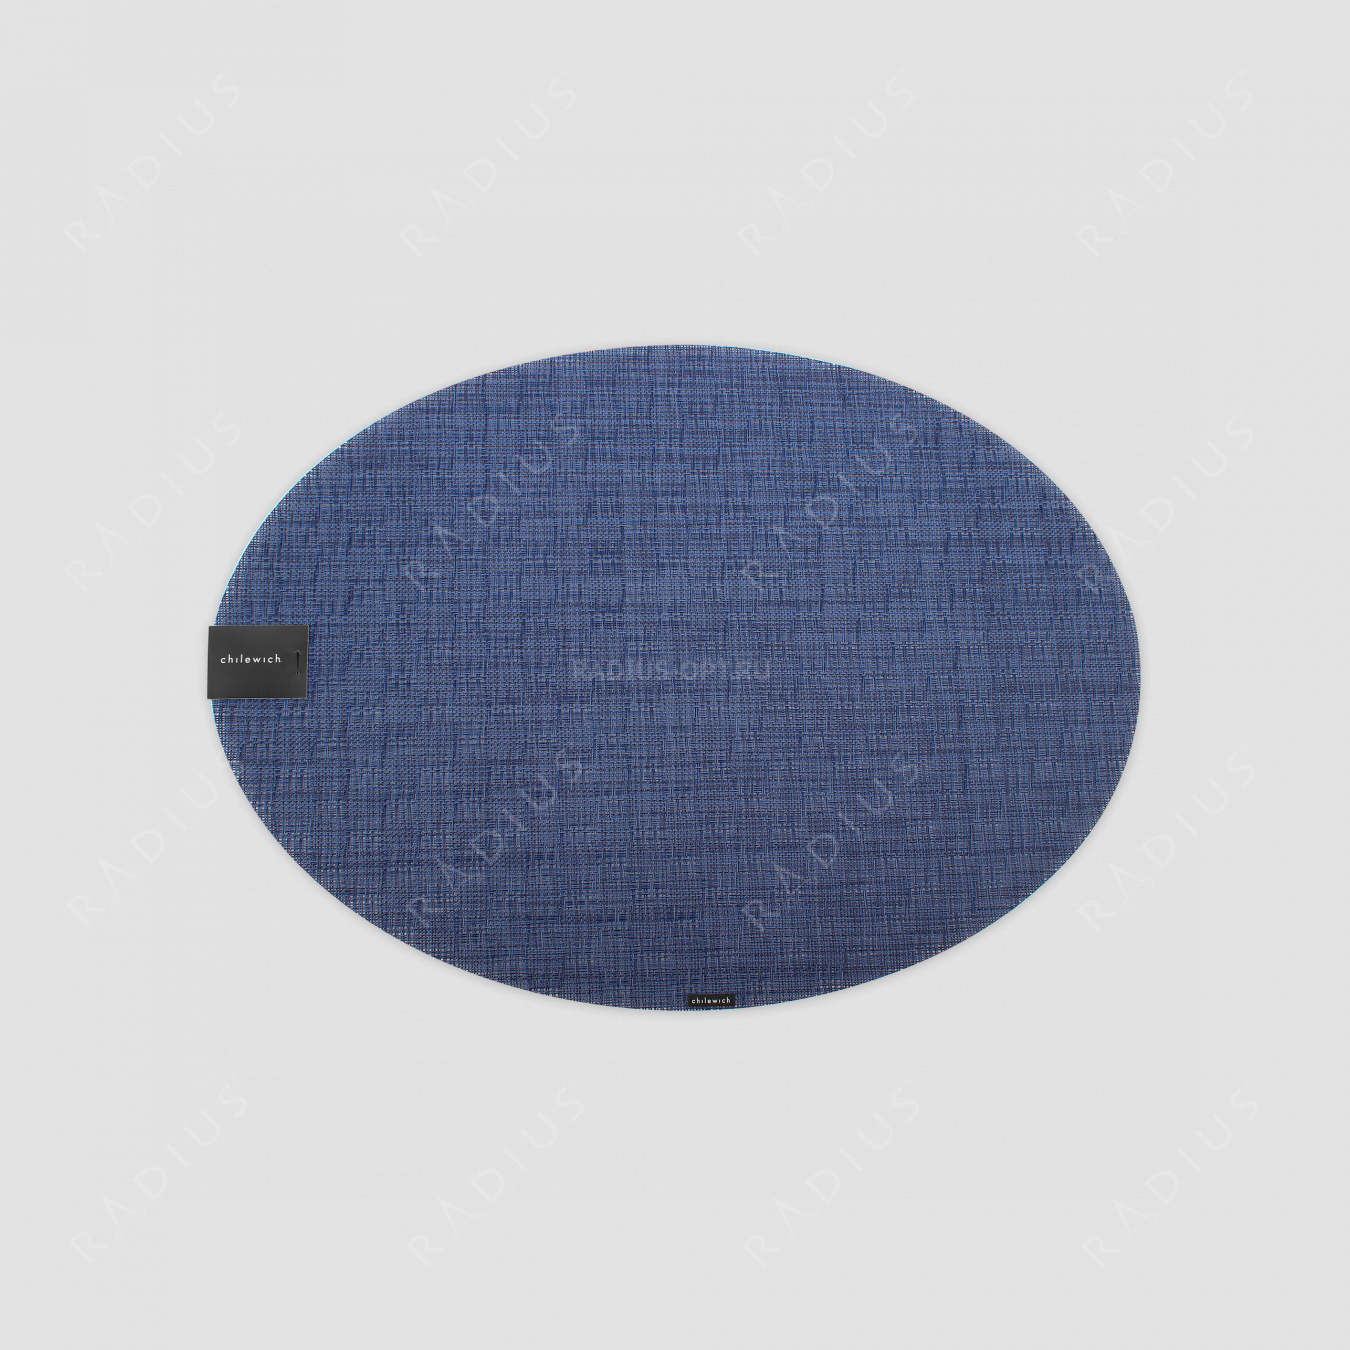 Салфетка подстановочная овальная, винил, размер 36х49 см, Blue Jean, серия Bay Weave, CHILEWICH, США